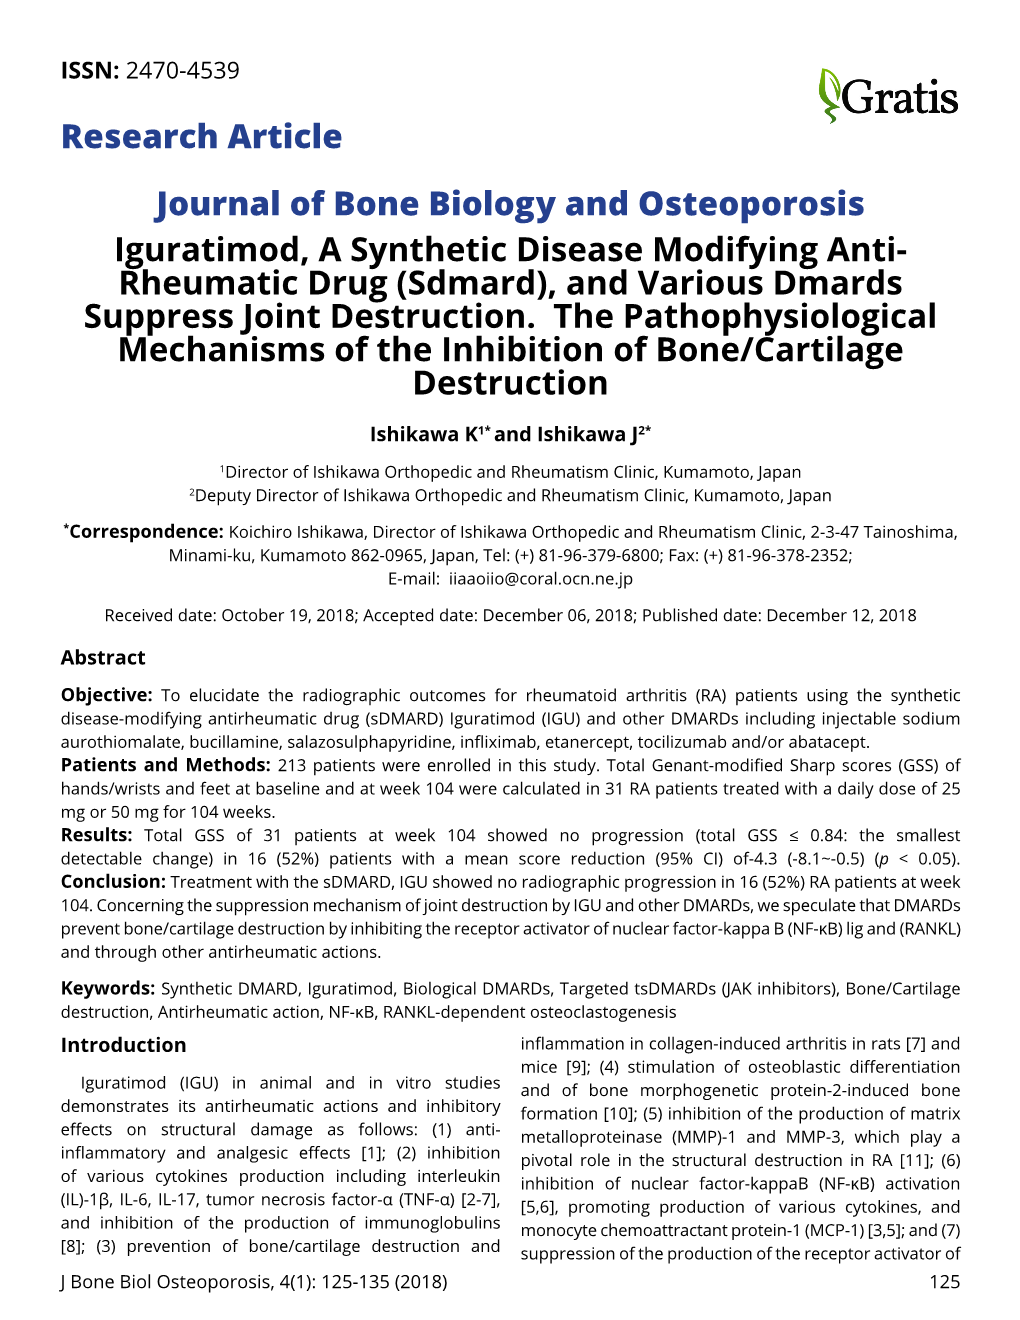 Journal of Bone Biology and Osteoporosis Iguratimod, a Synthetic Disease Modifying Anti- Rheumatic Drug (Sdmard), and Various Dmards Suppress Joint Destruction